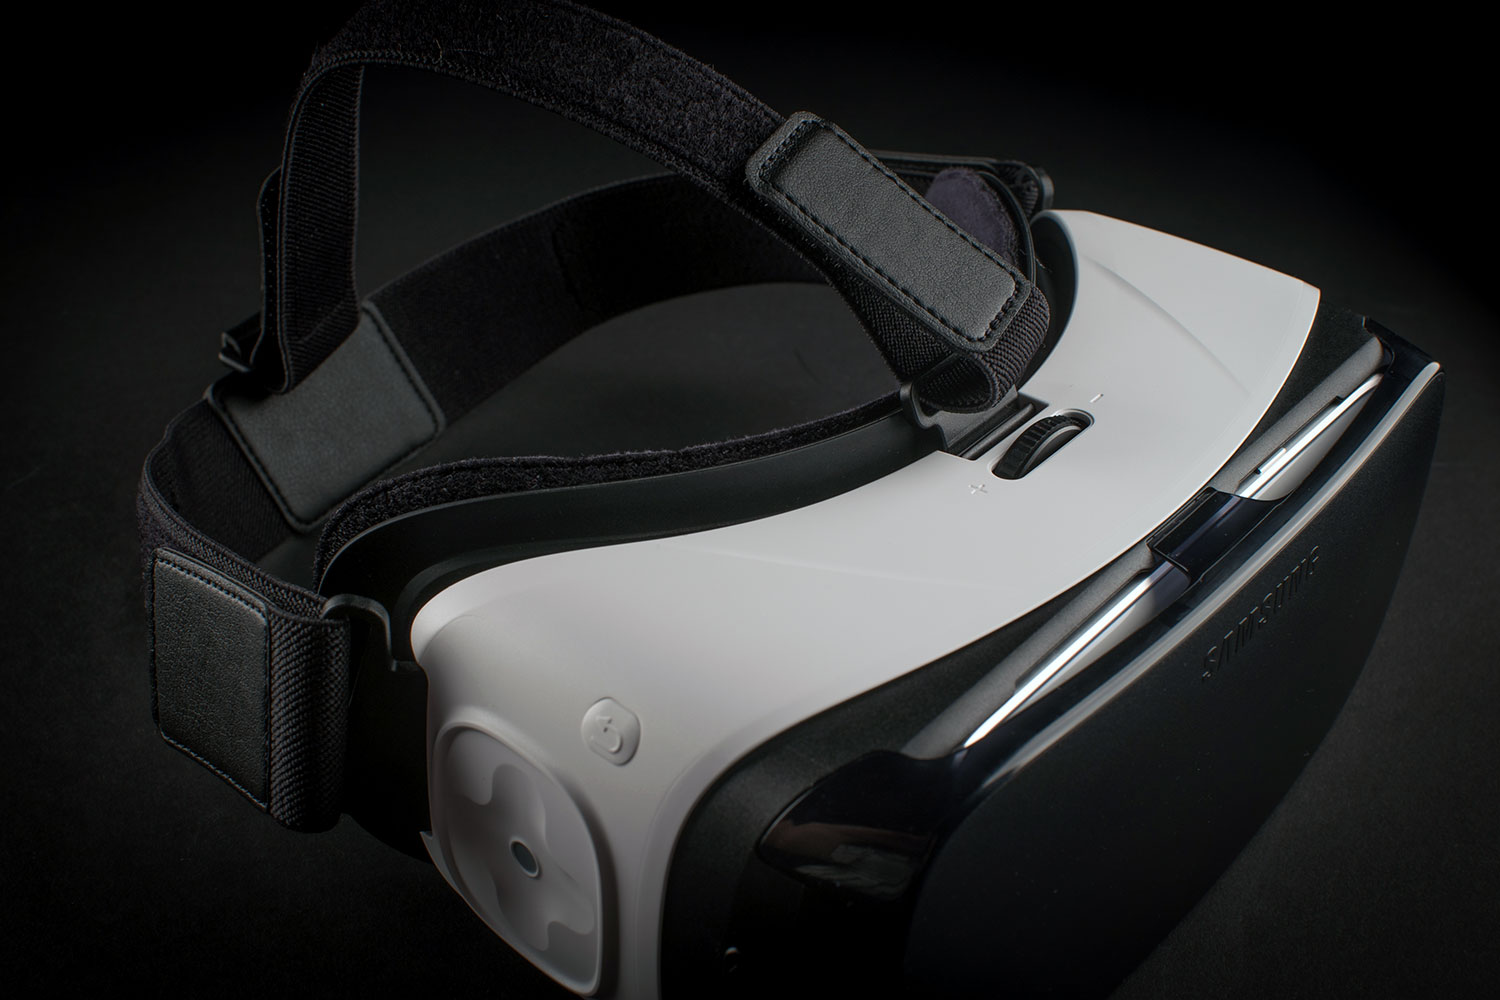 Gear VR Review | Digital Trends